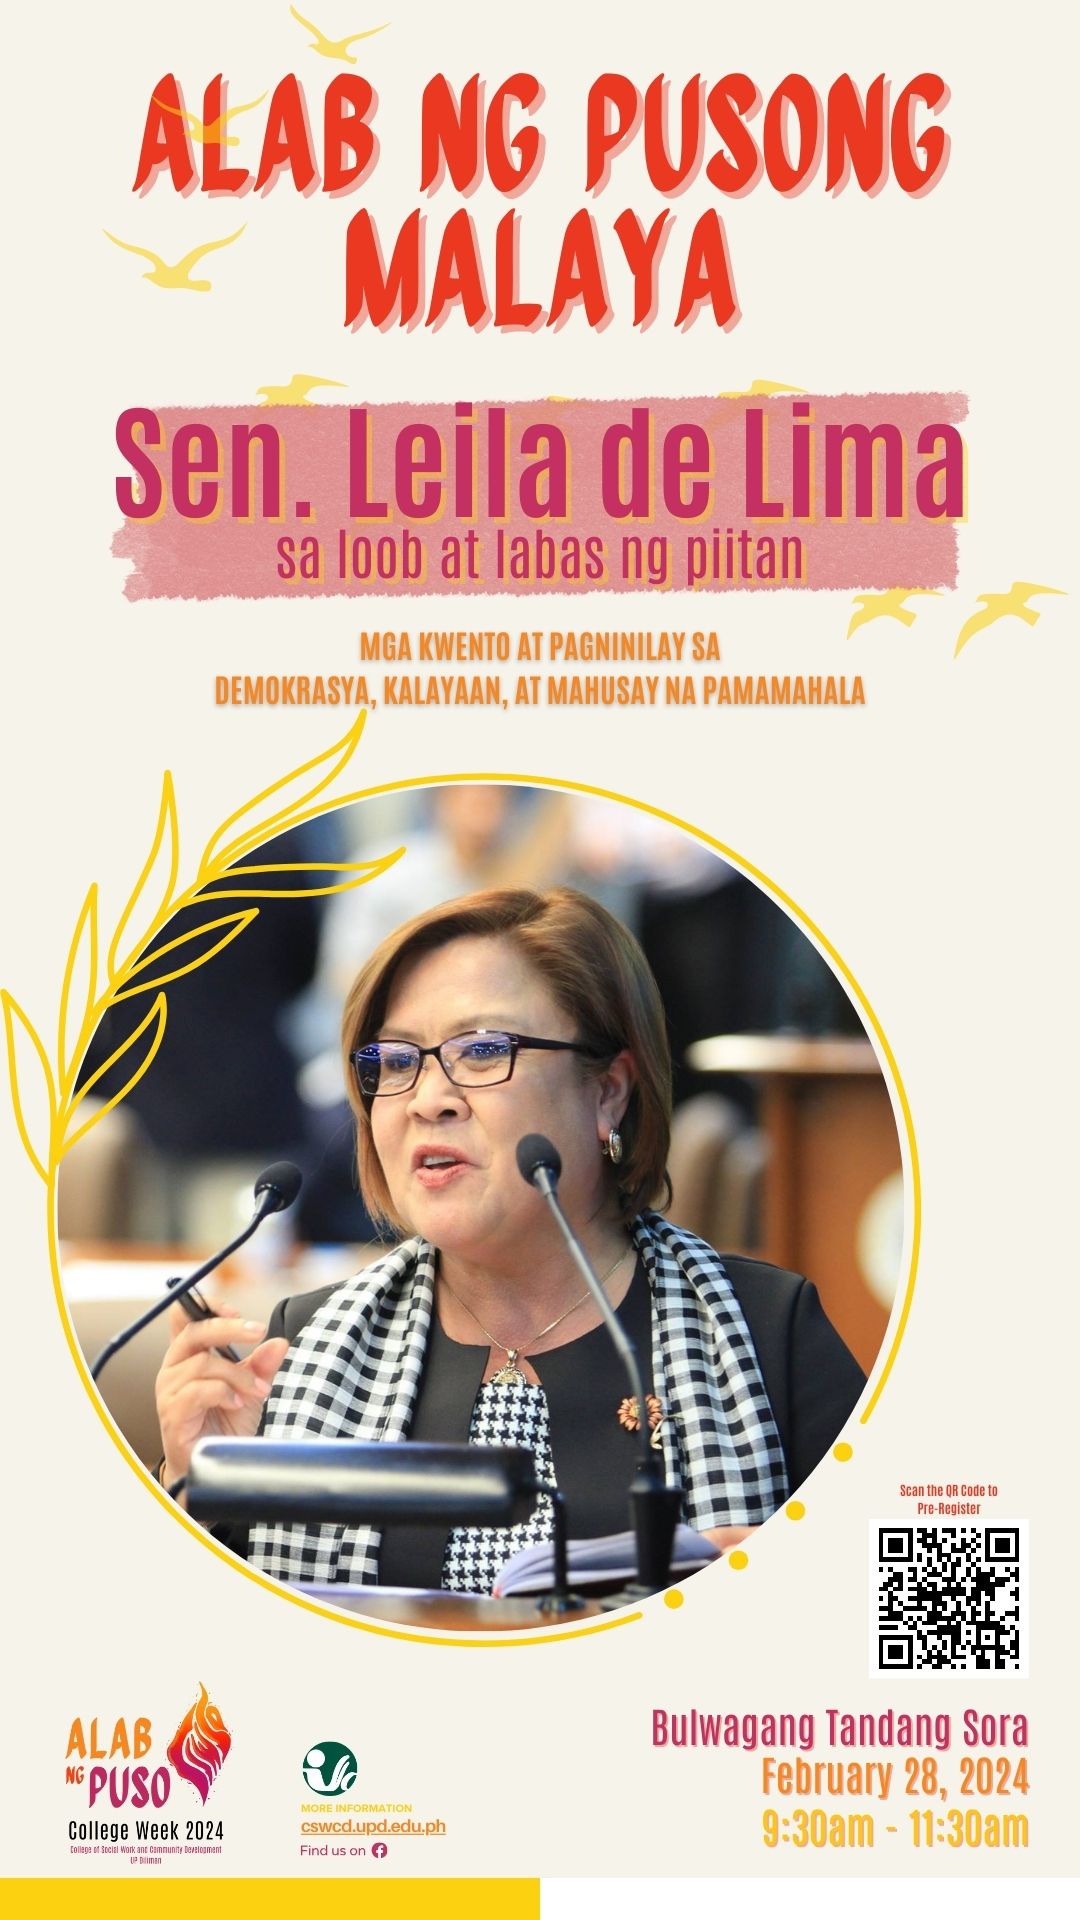 Feb. 28, 2024 | CSWCD College Week 2024 Sen. Leila de Lima Lecture